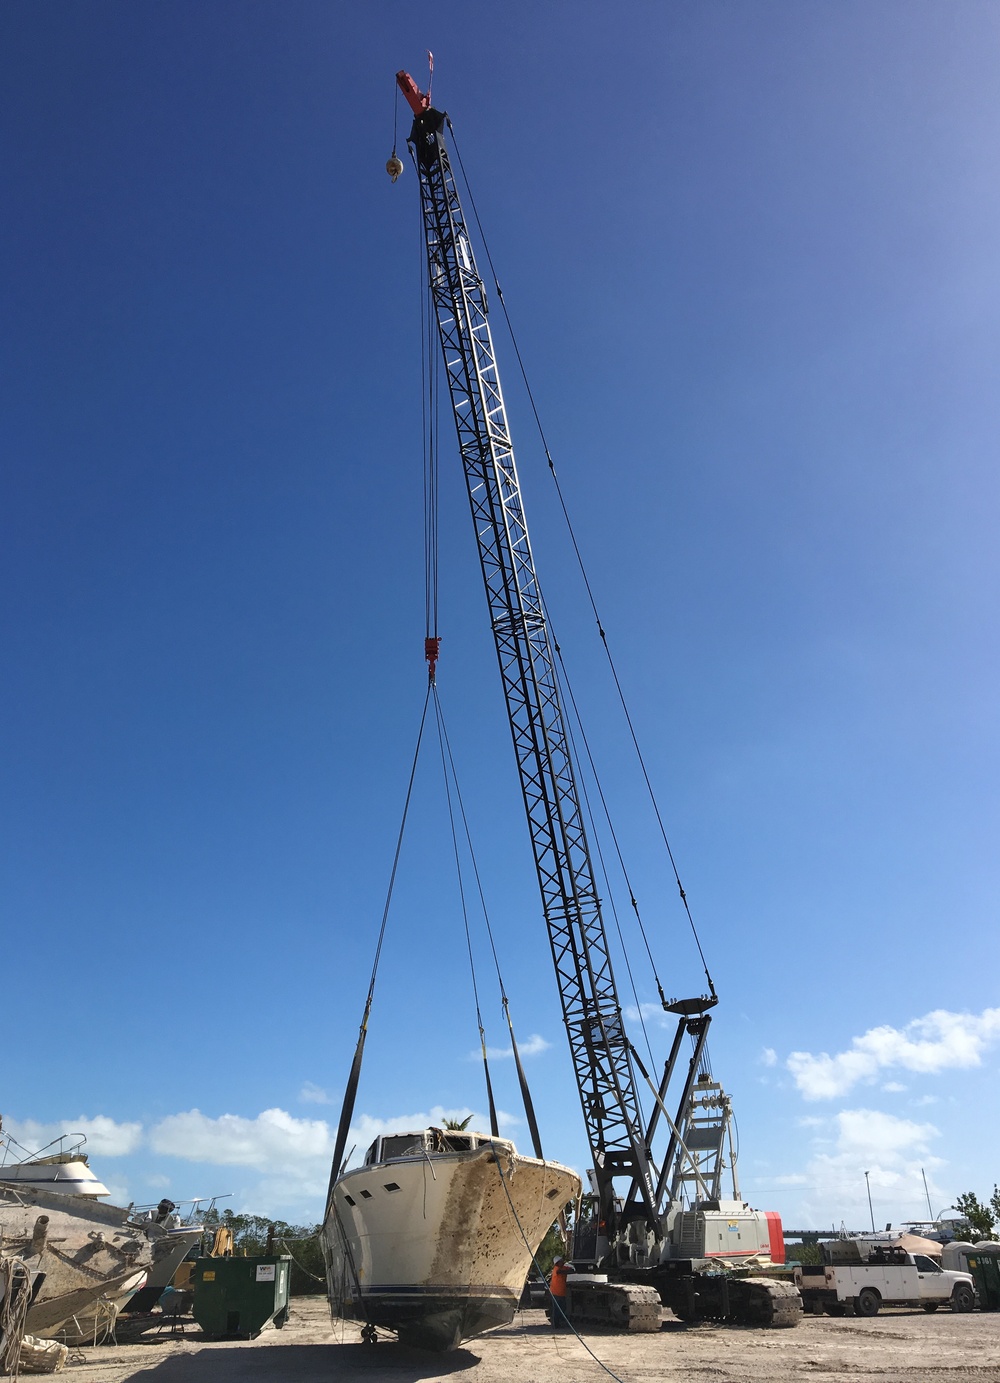 ESF-10 Florida vessel removal operations on Marathon Key